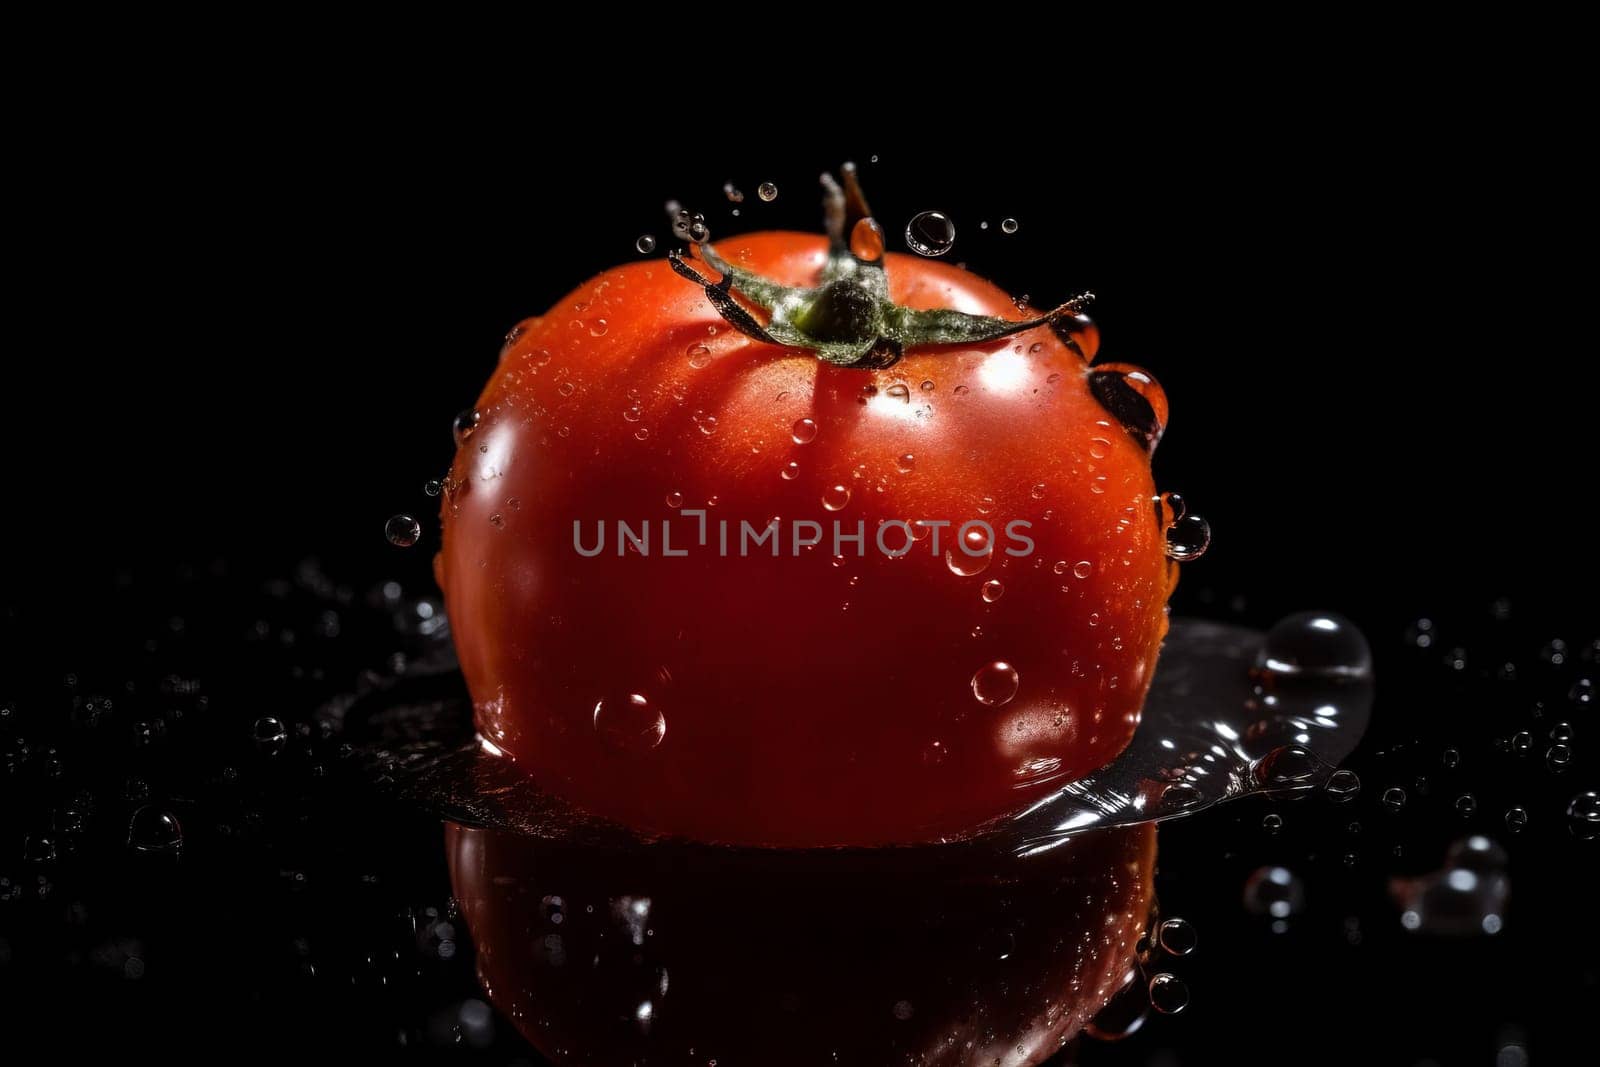 Tomato on black background by ylivdesign